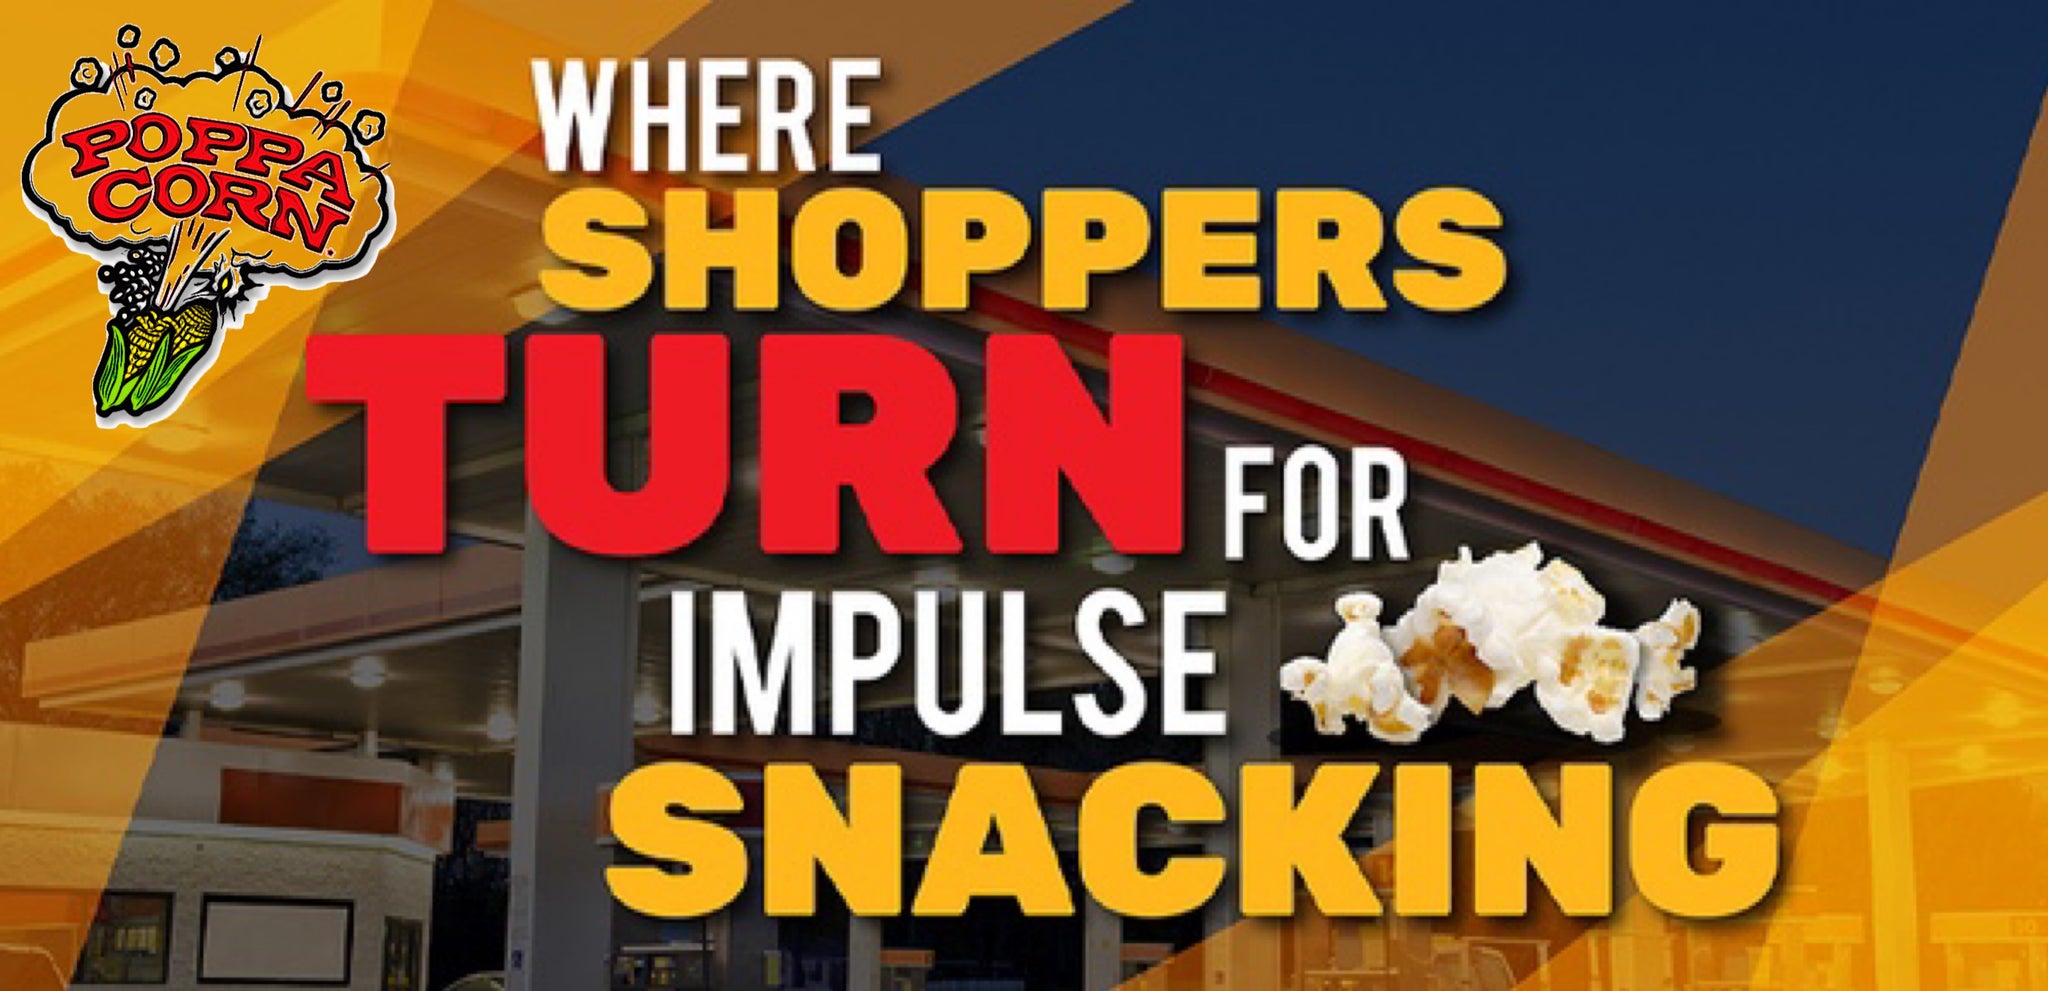 Where Shoppers Turn for Impulse Snacking